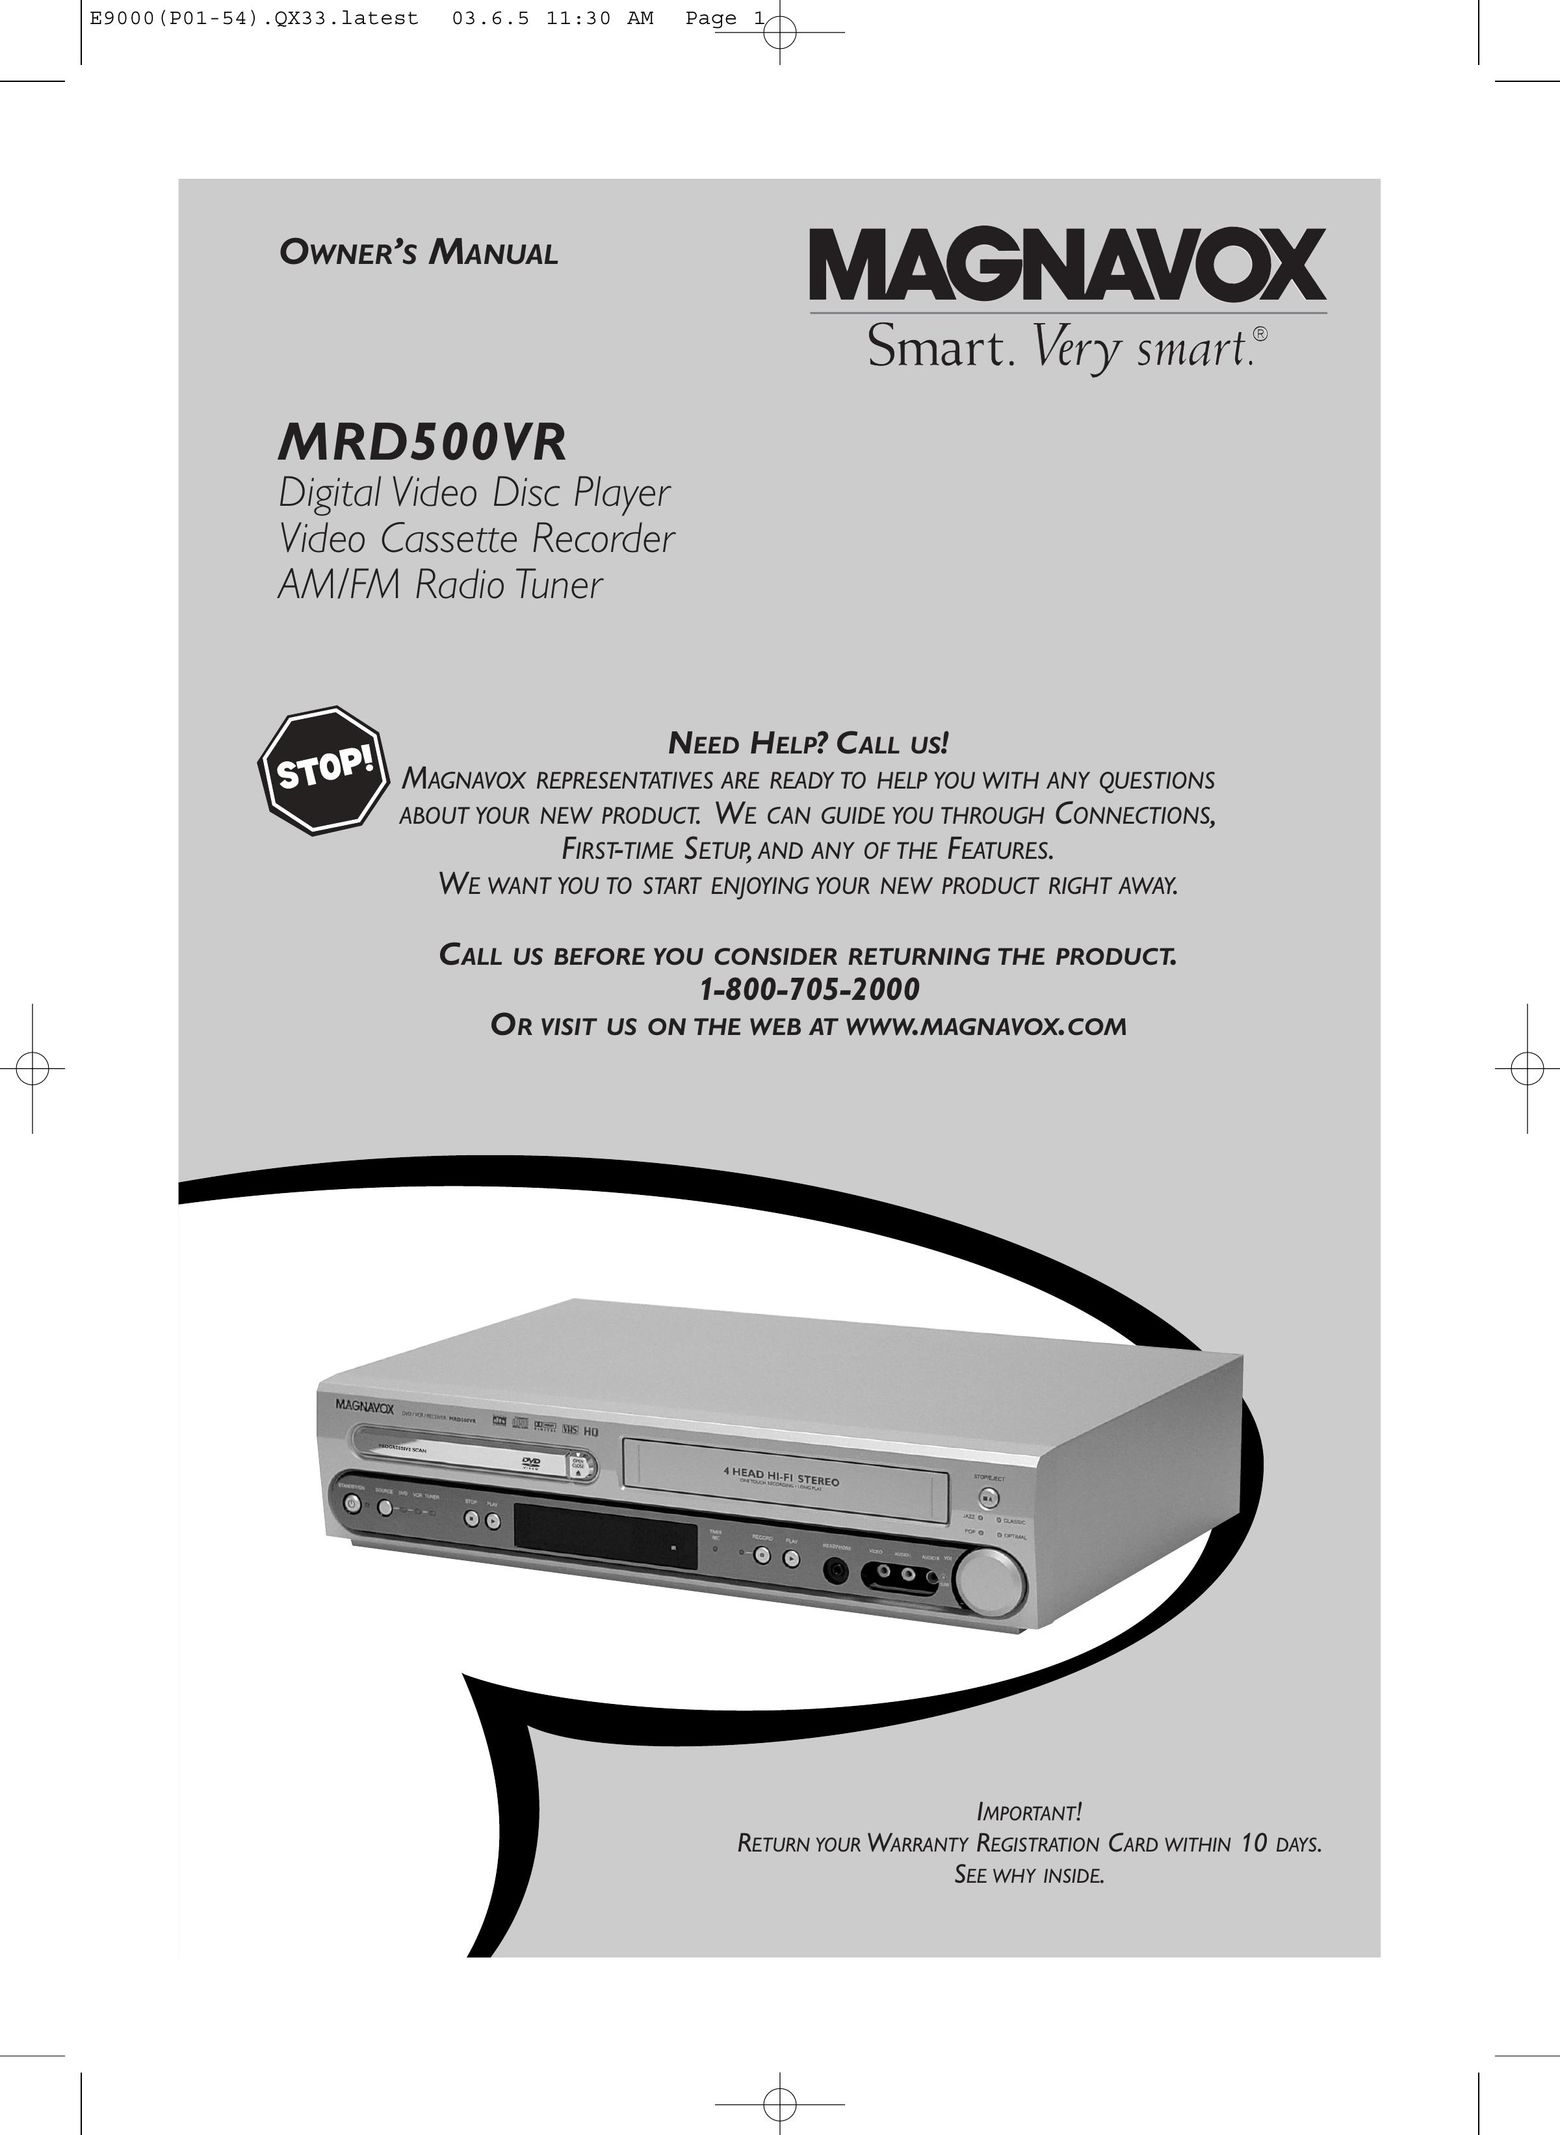 Magnavox MRD500VR DVD VCR Combo User Manual